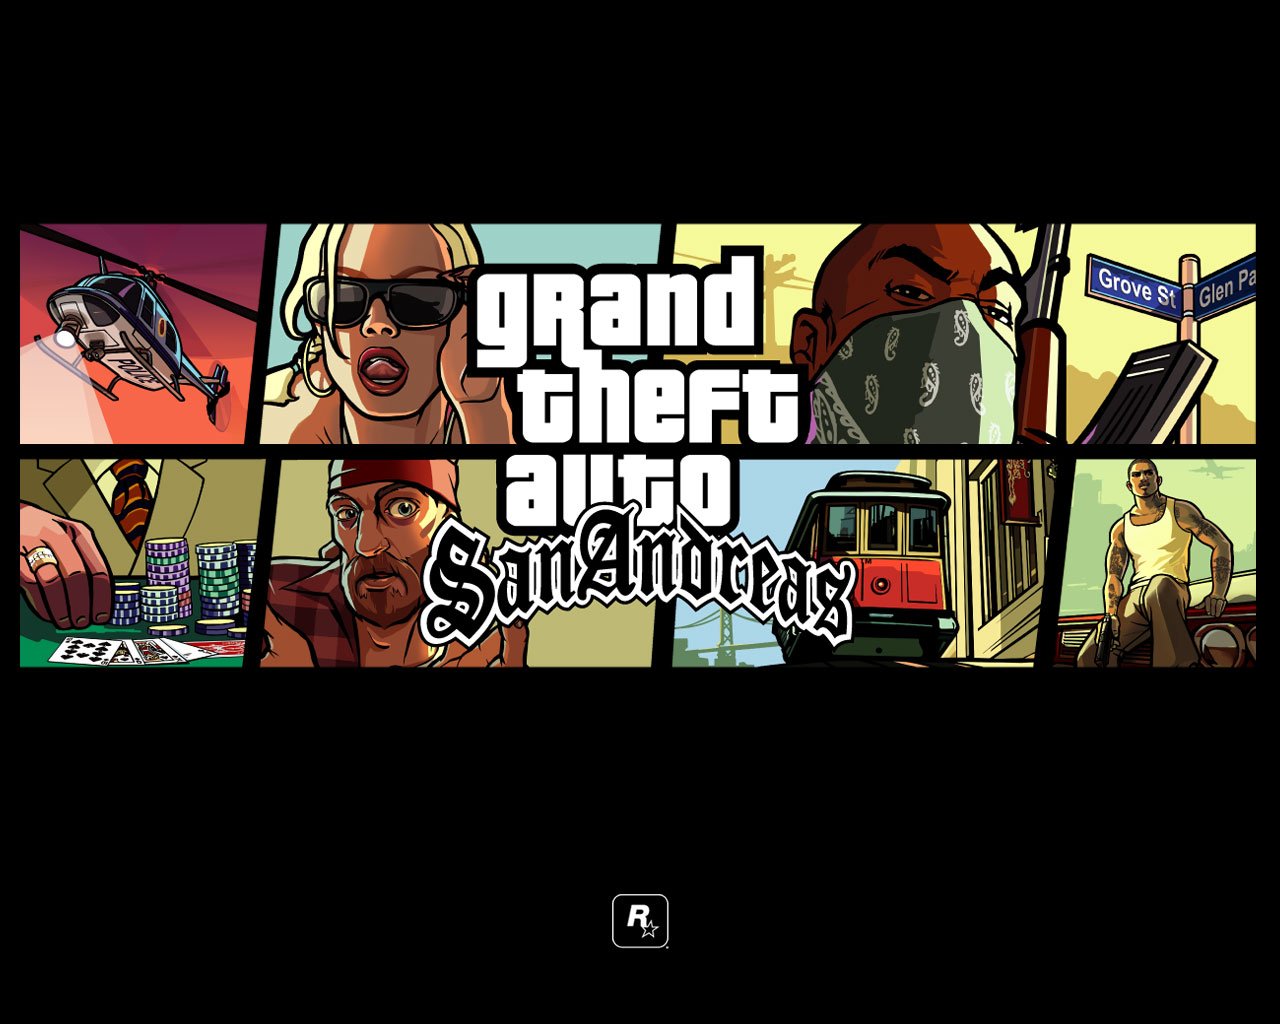 Download Grand Theft Auto: GTA San Andreas jetzt im App Store 2